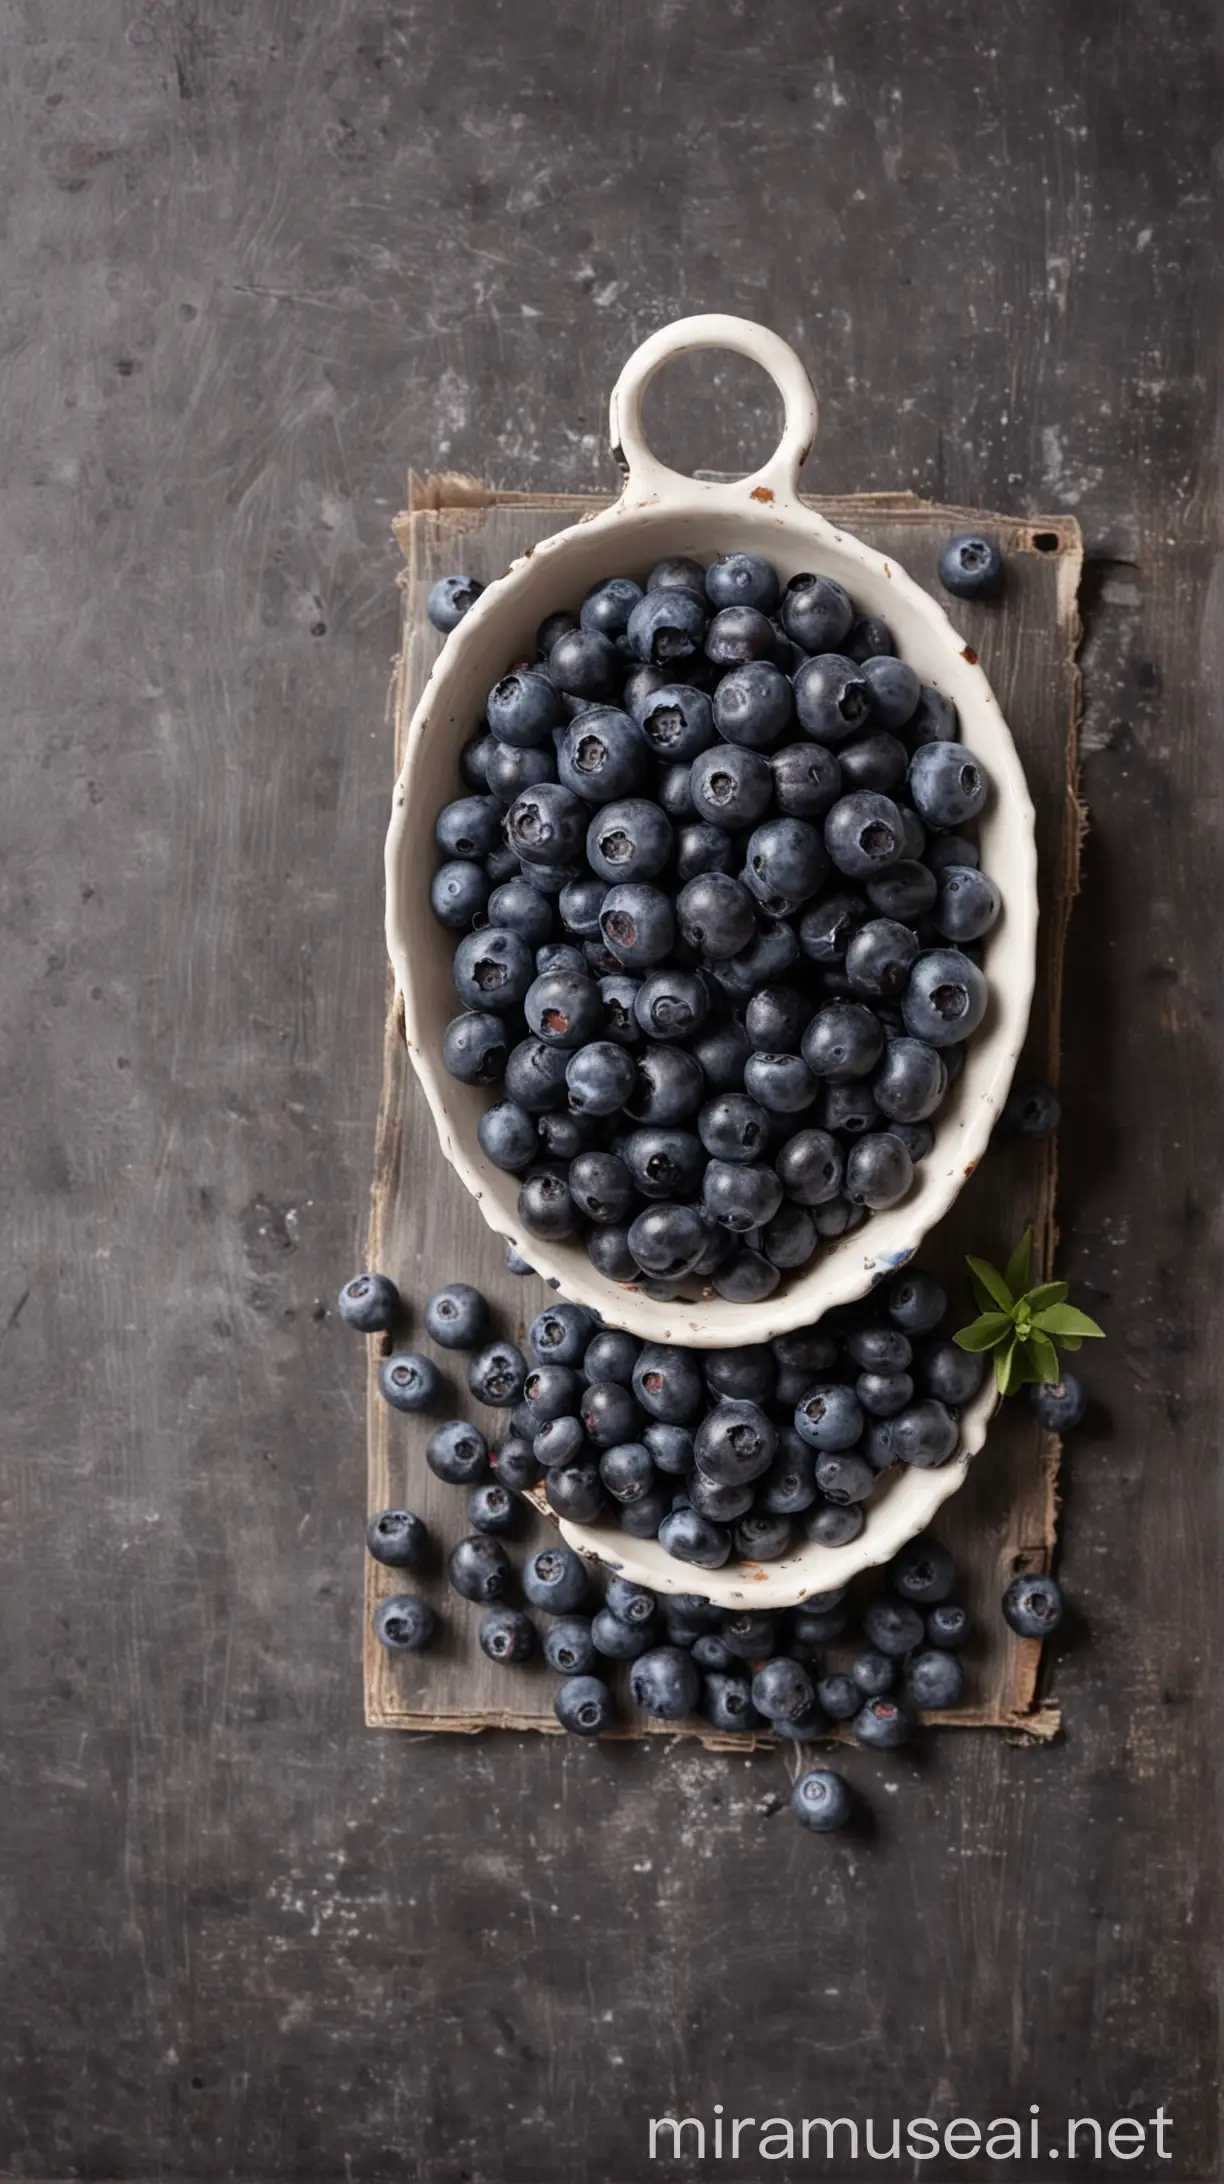 Fresh Blueberries Arranged on Wooden Table